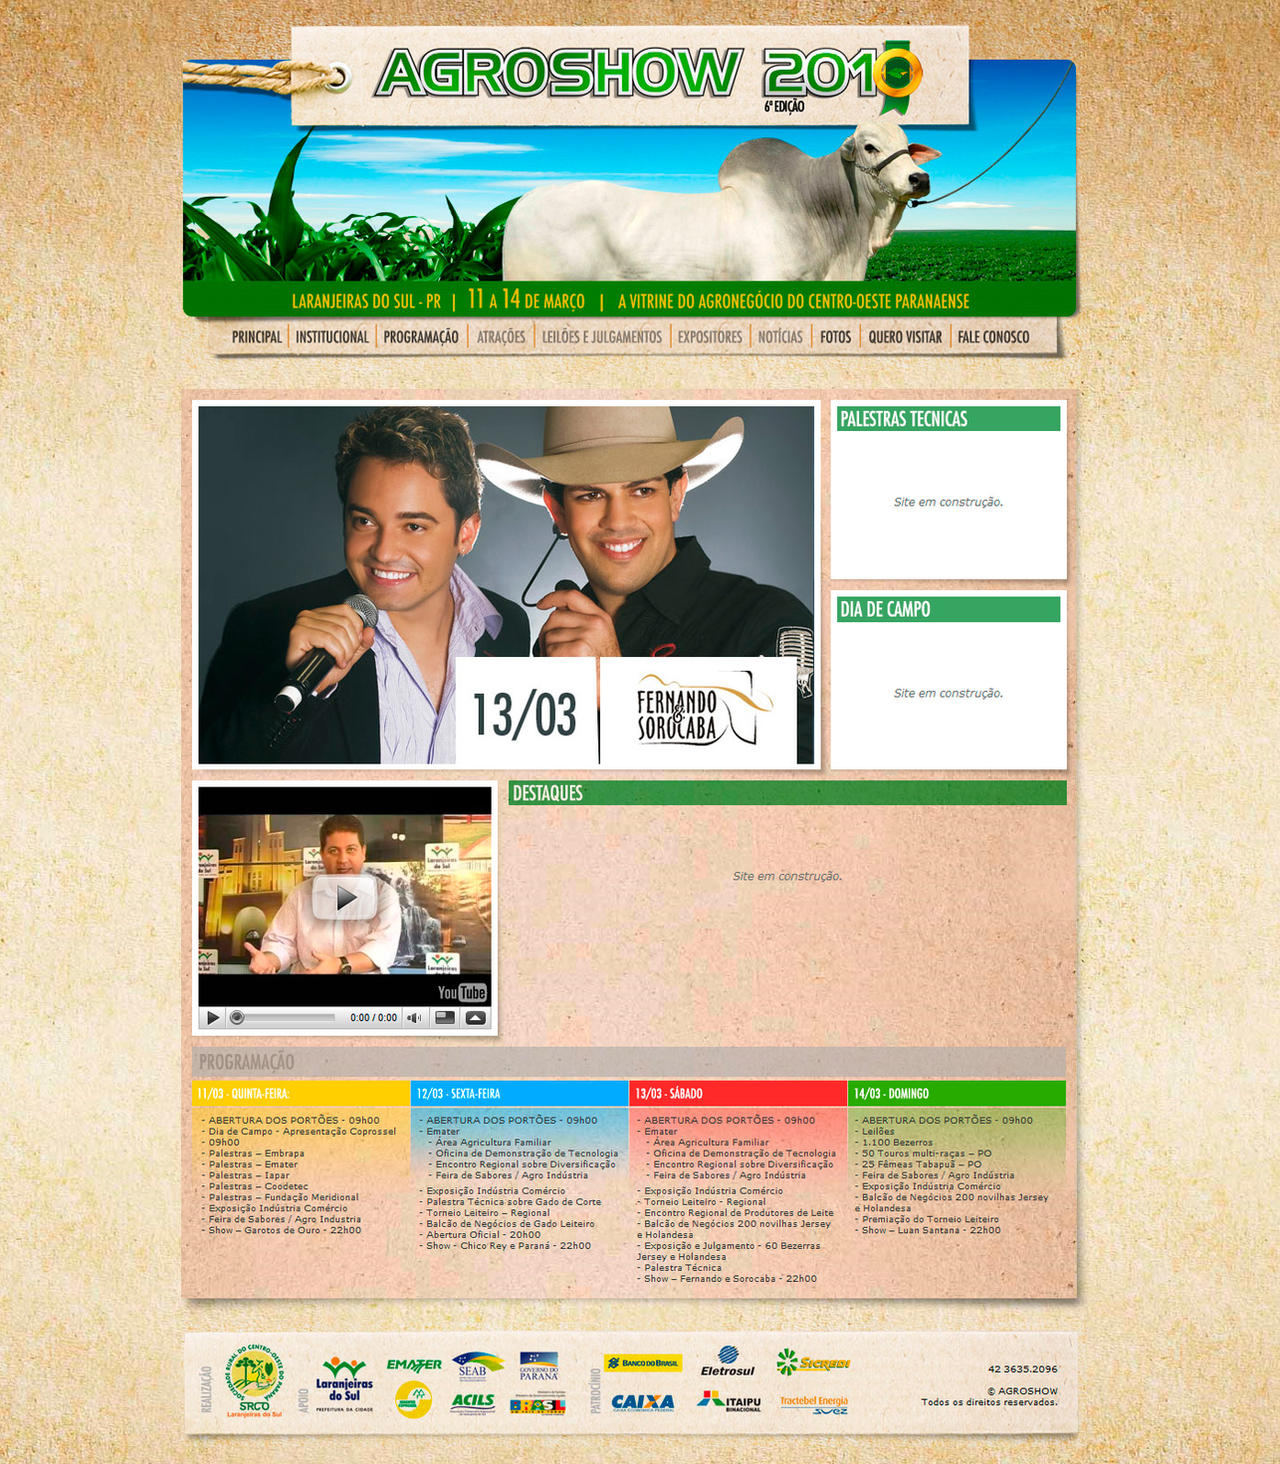 Agroshow 2010 Website